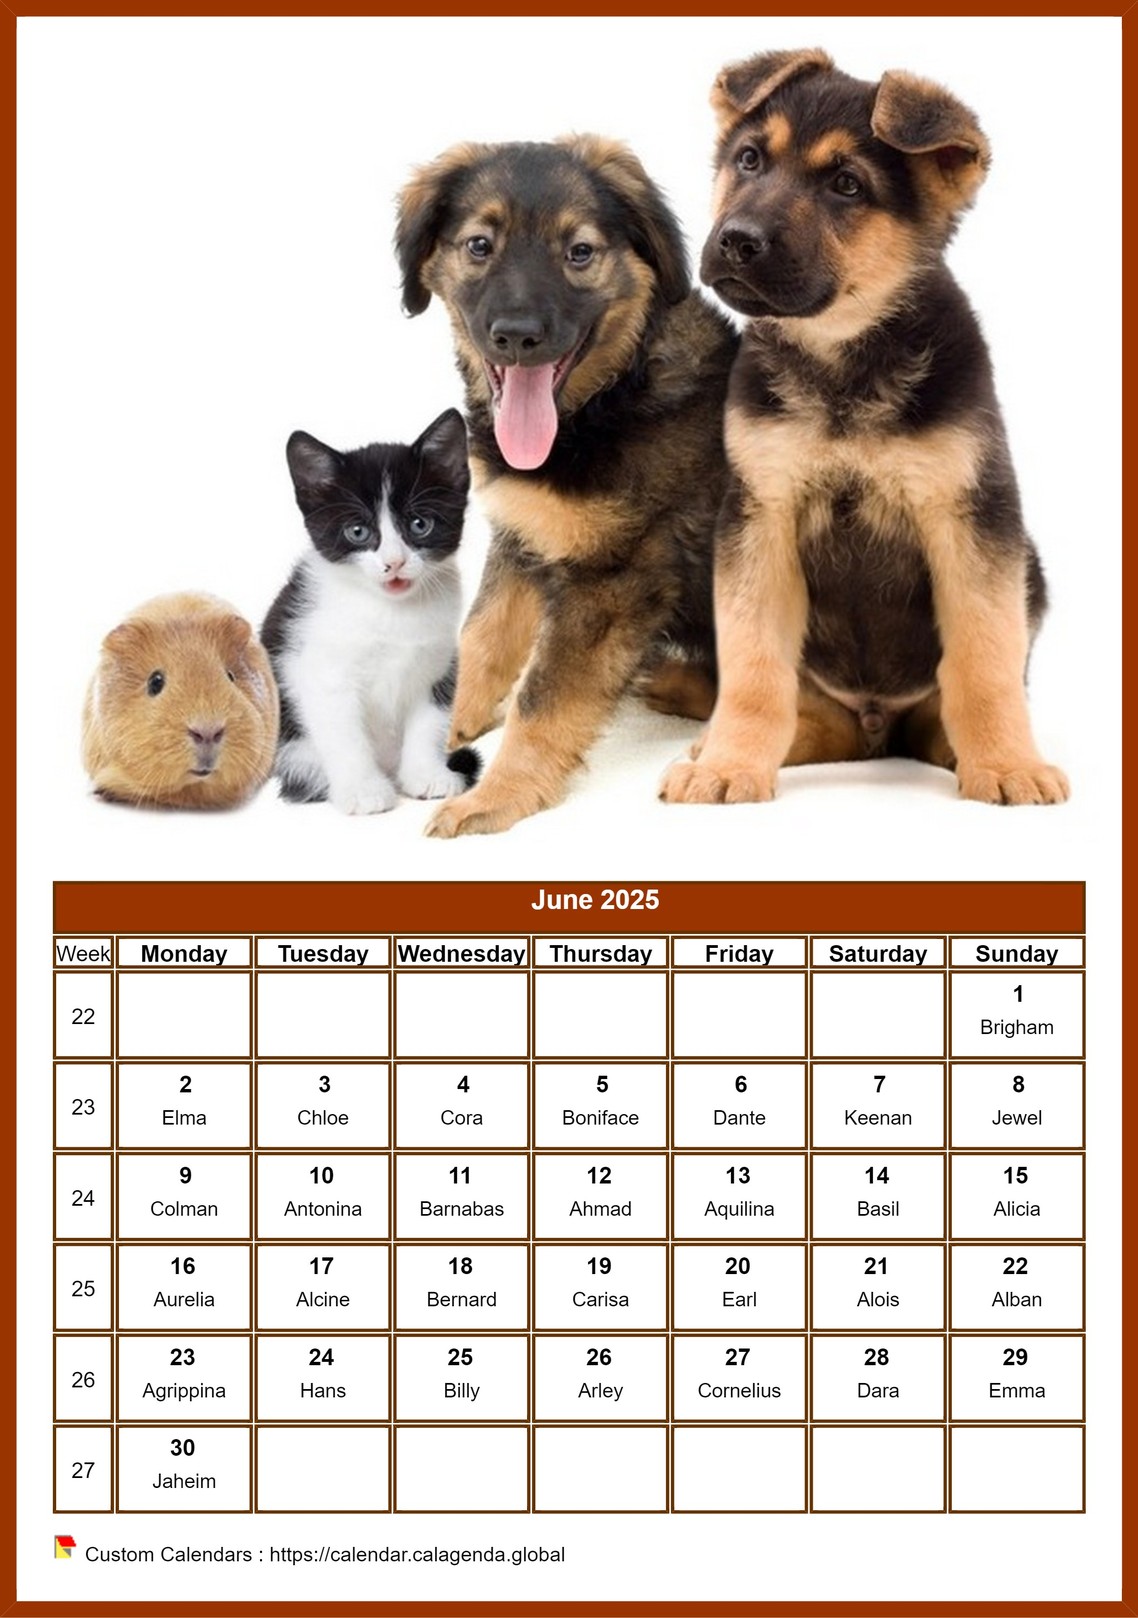 Calendar June 2025 dogs